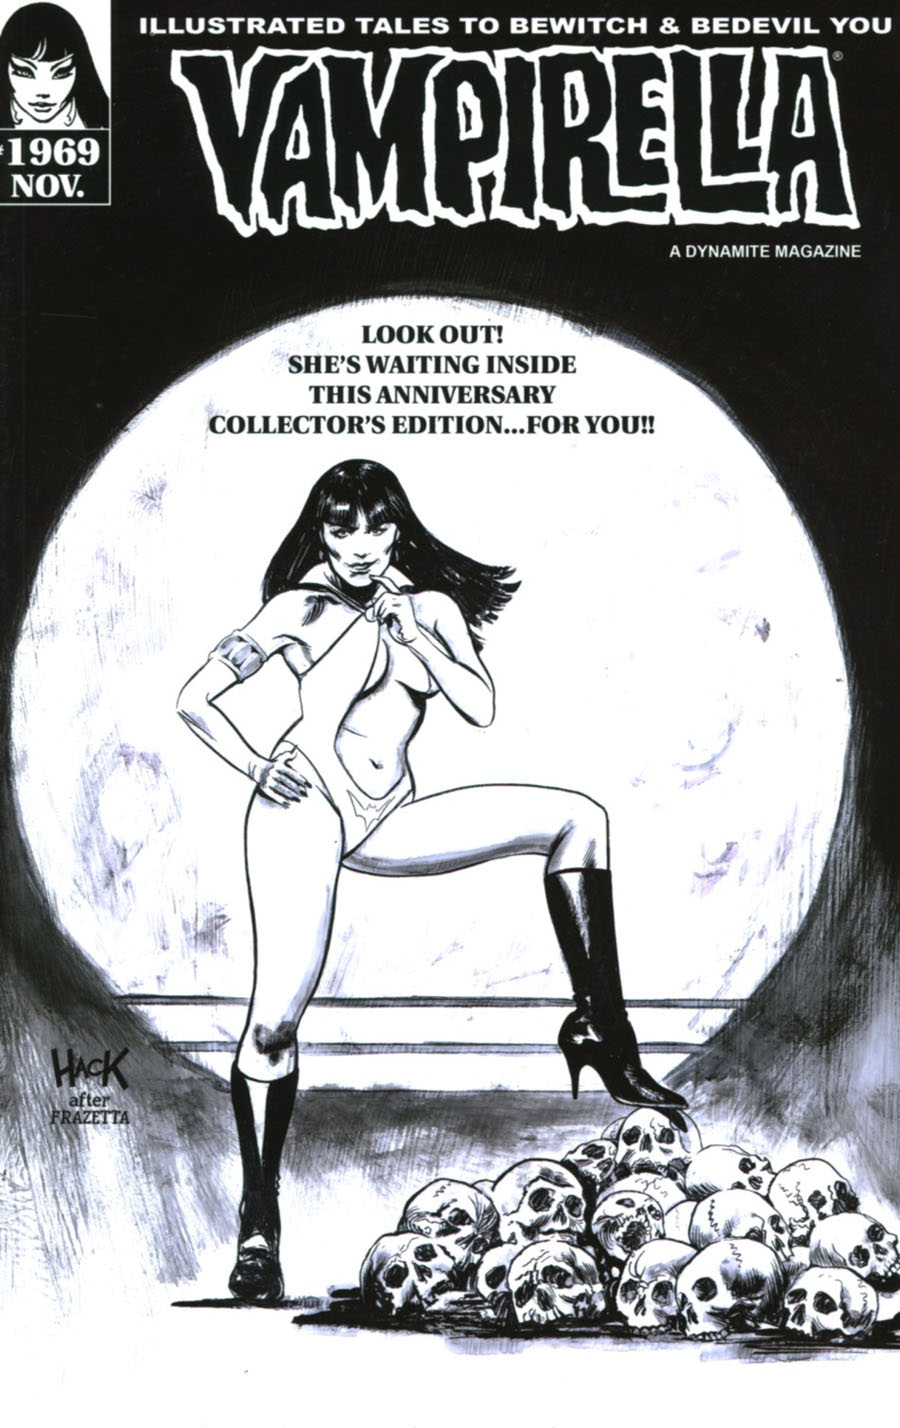 Vampirella #1969 Cover C Rare Robert Hack Black & White Cover